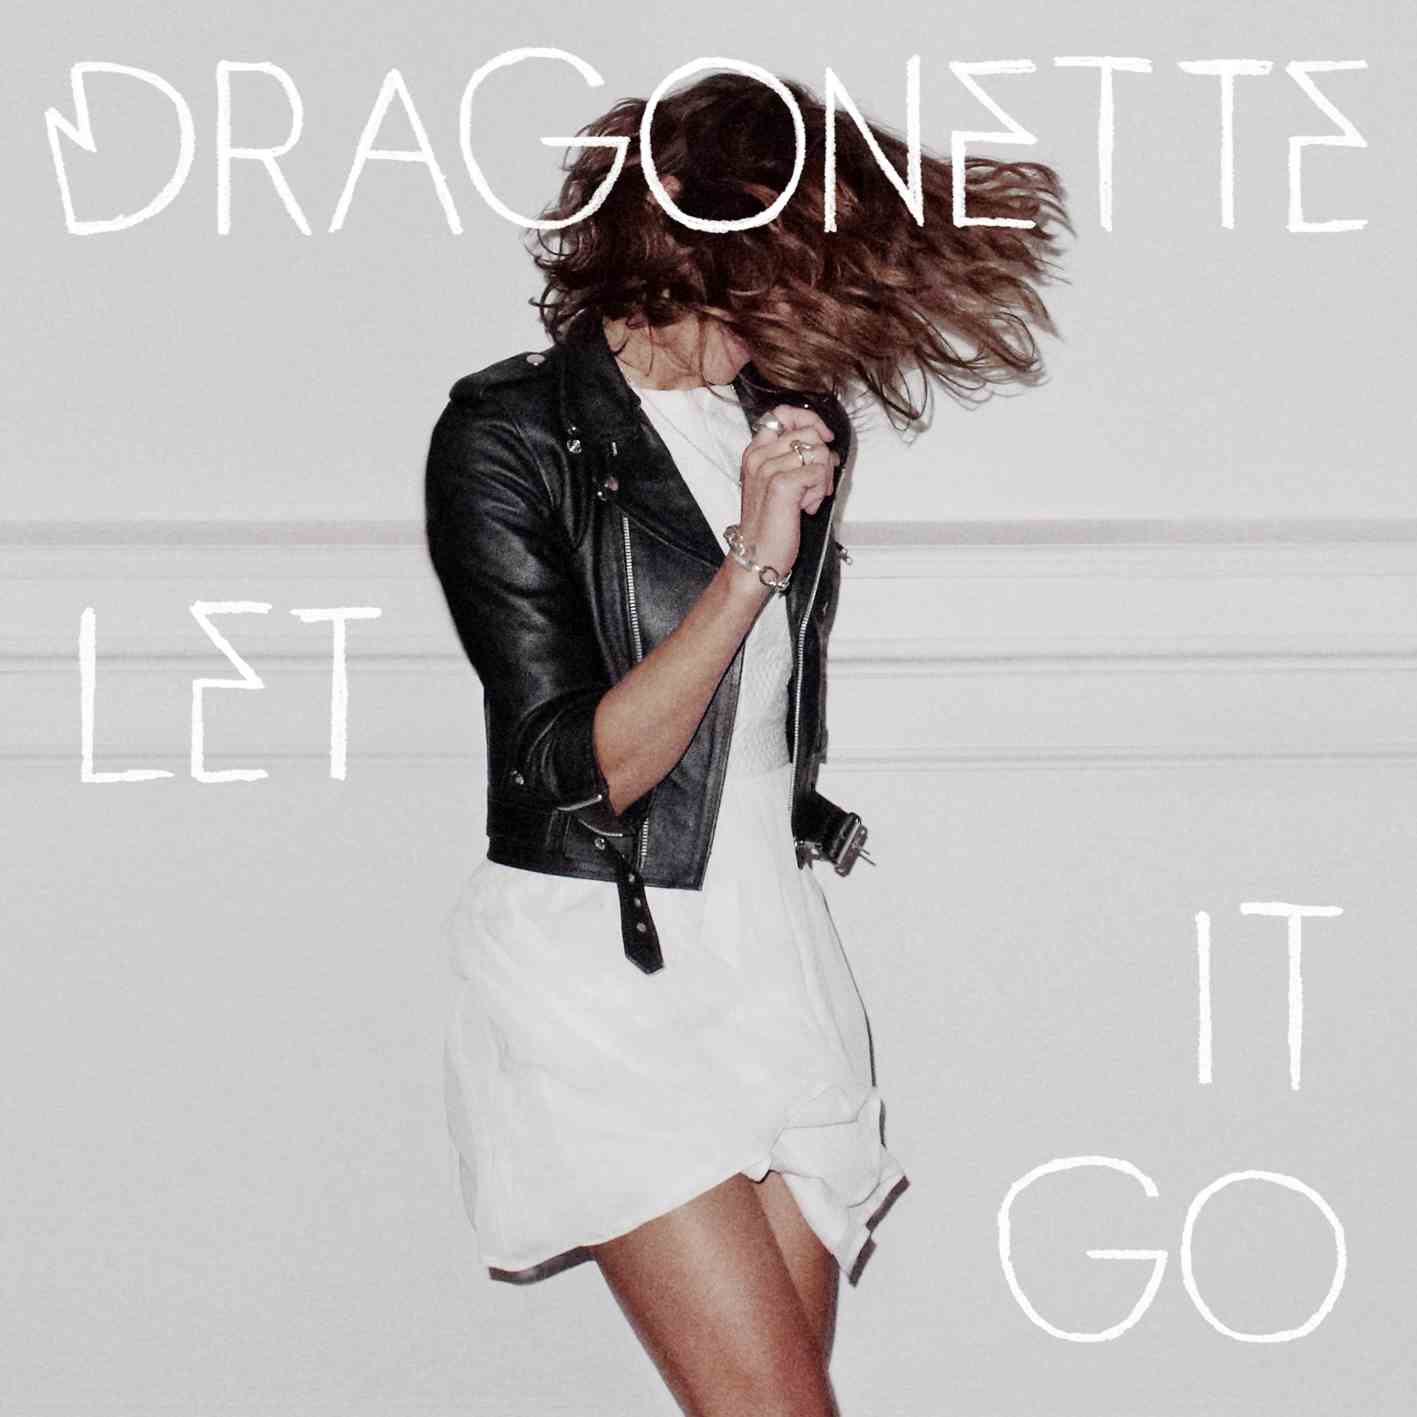 Dragonette return with new single ‘Let It Go’